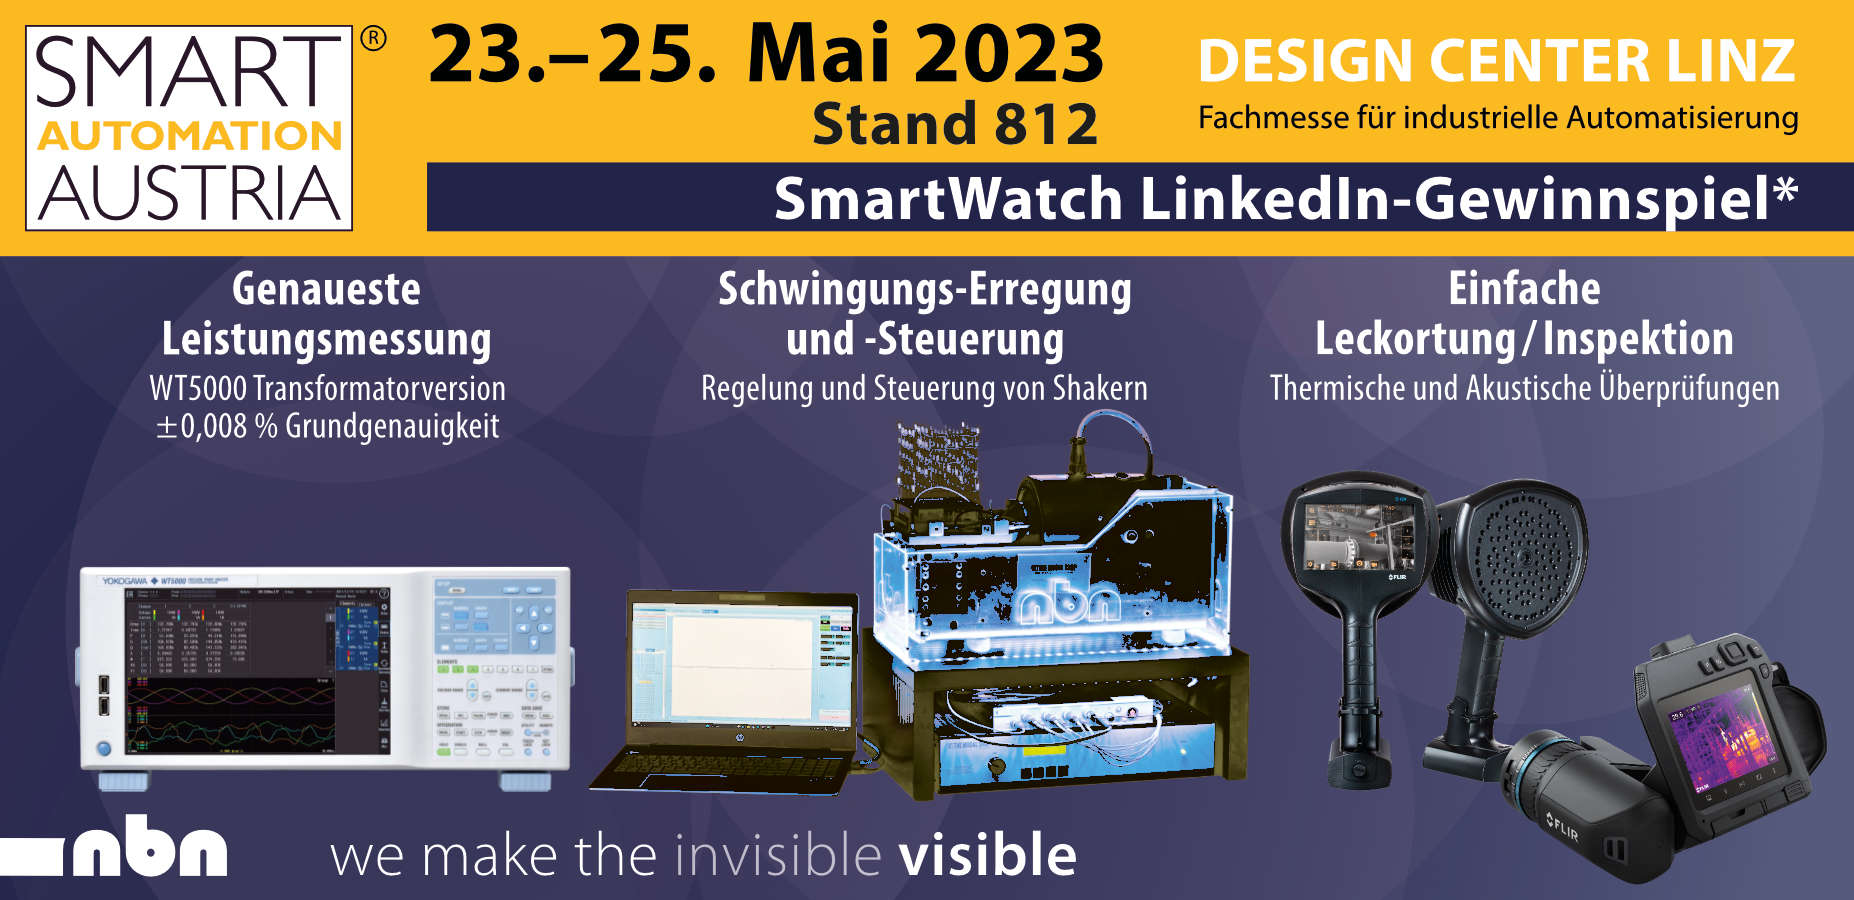 SMART Automation Austria – 23. bis 25. Mai 2023 in Linz